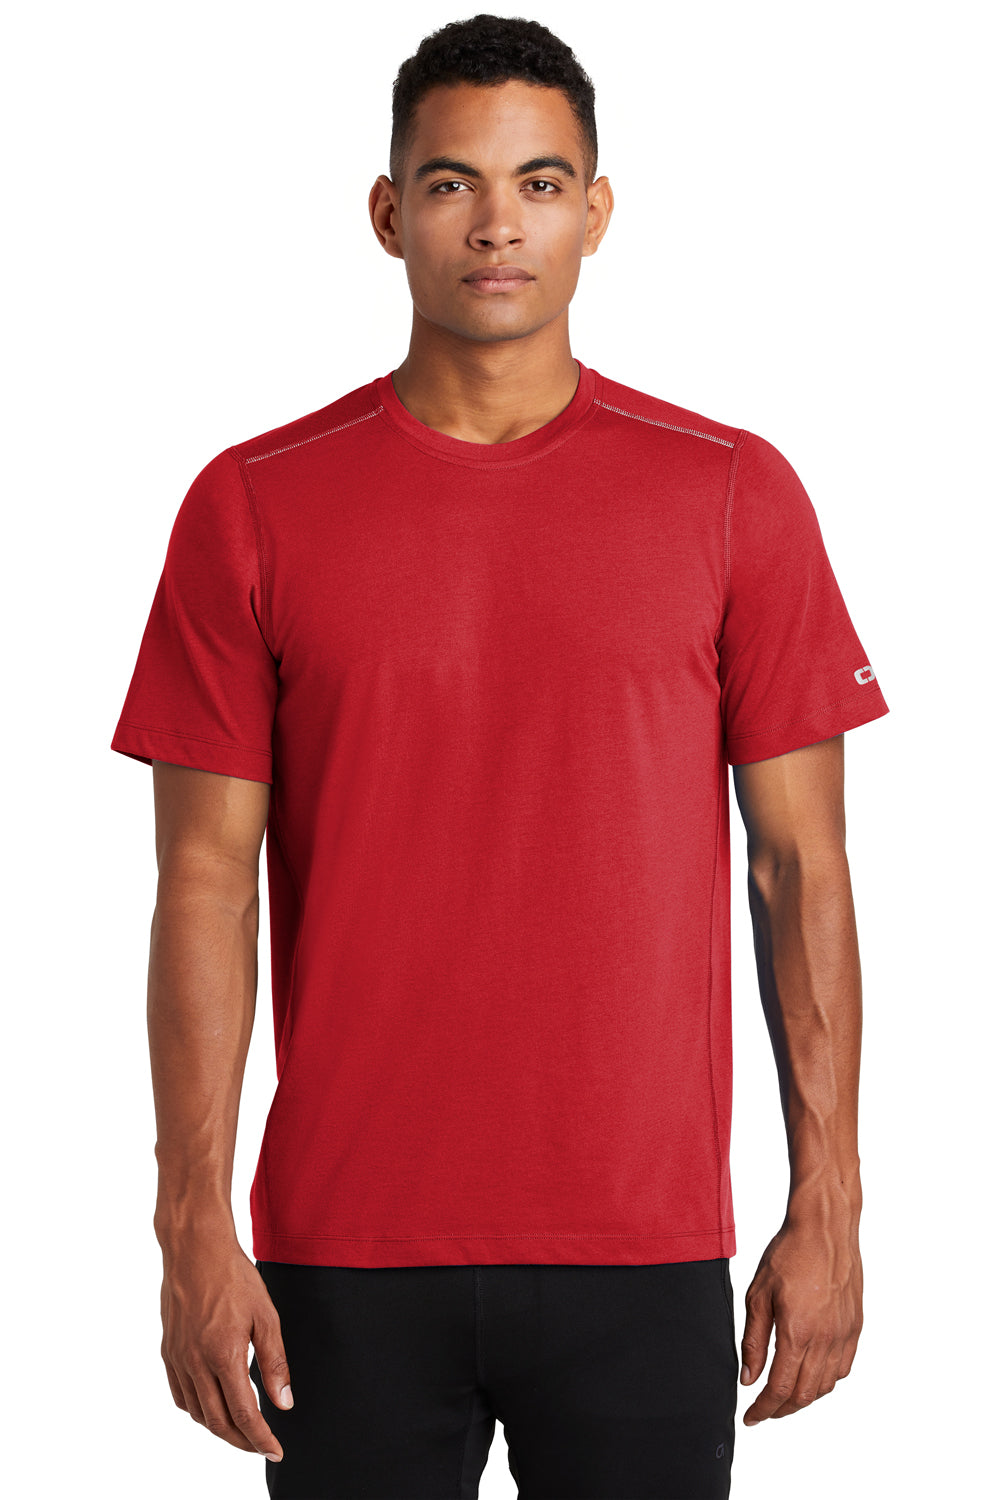 Ogio OE336 Mens Endurance Peak Jersey Moisture Wicking Short Sleeve Crewneck T-Shirt Red Front